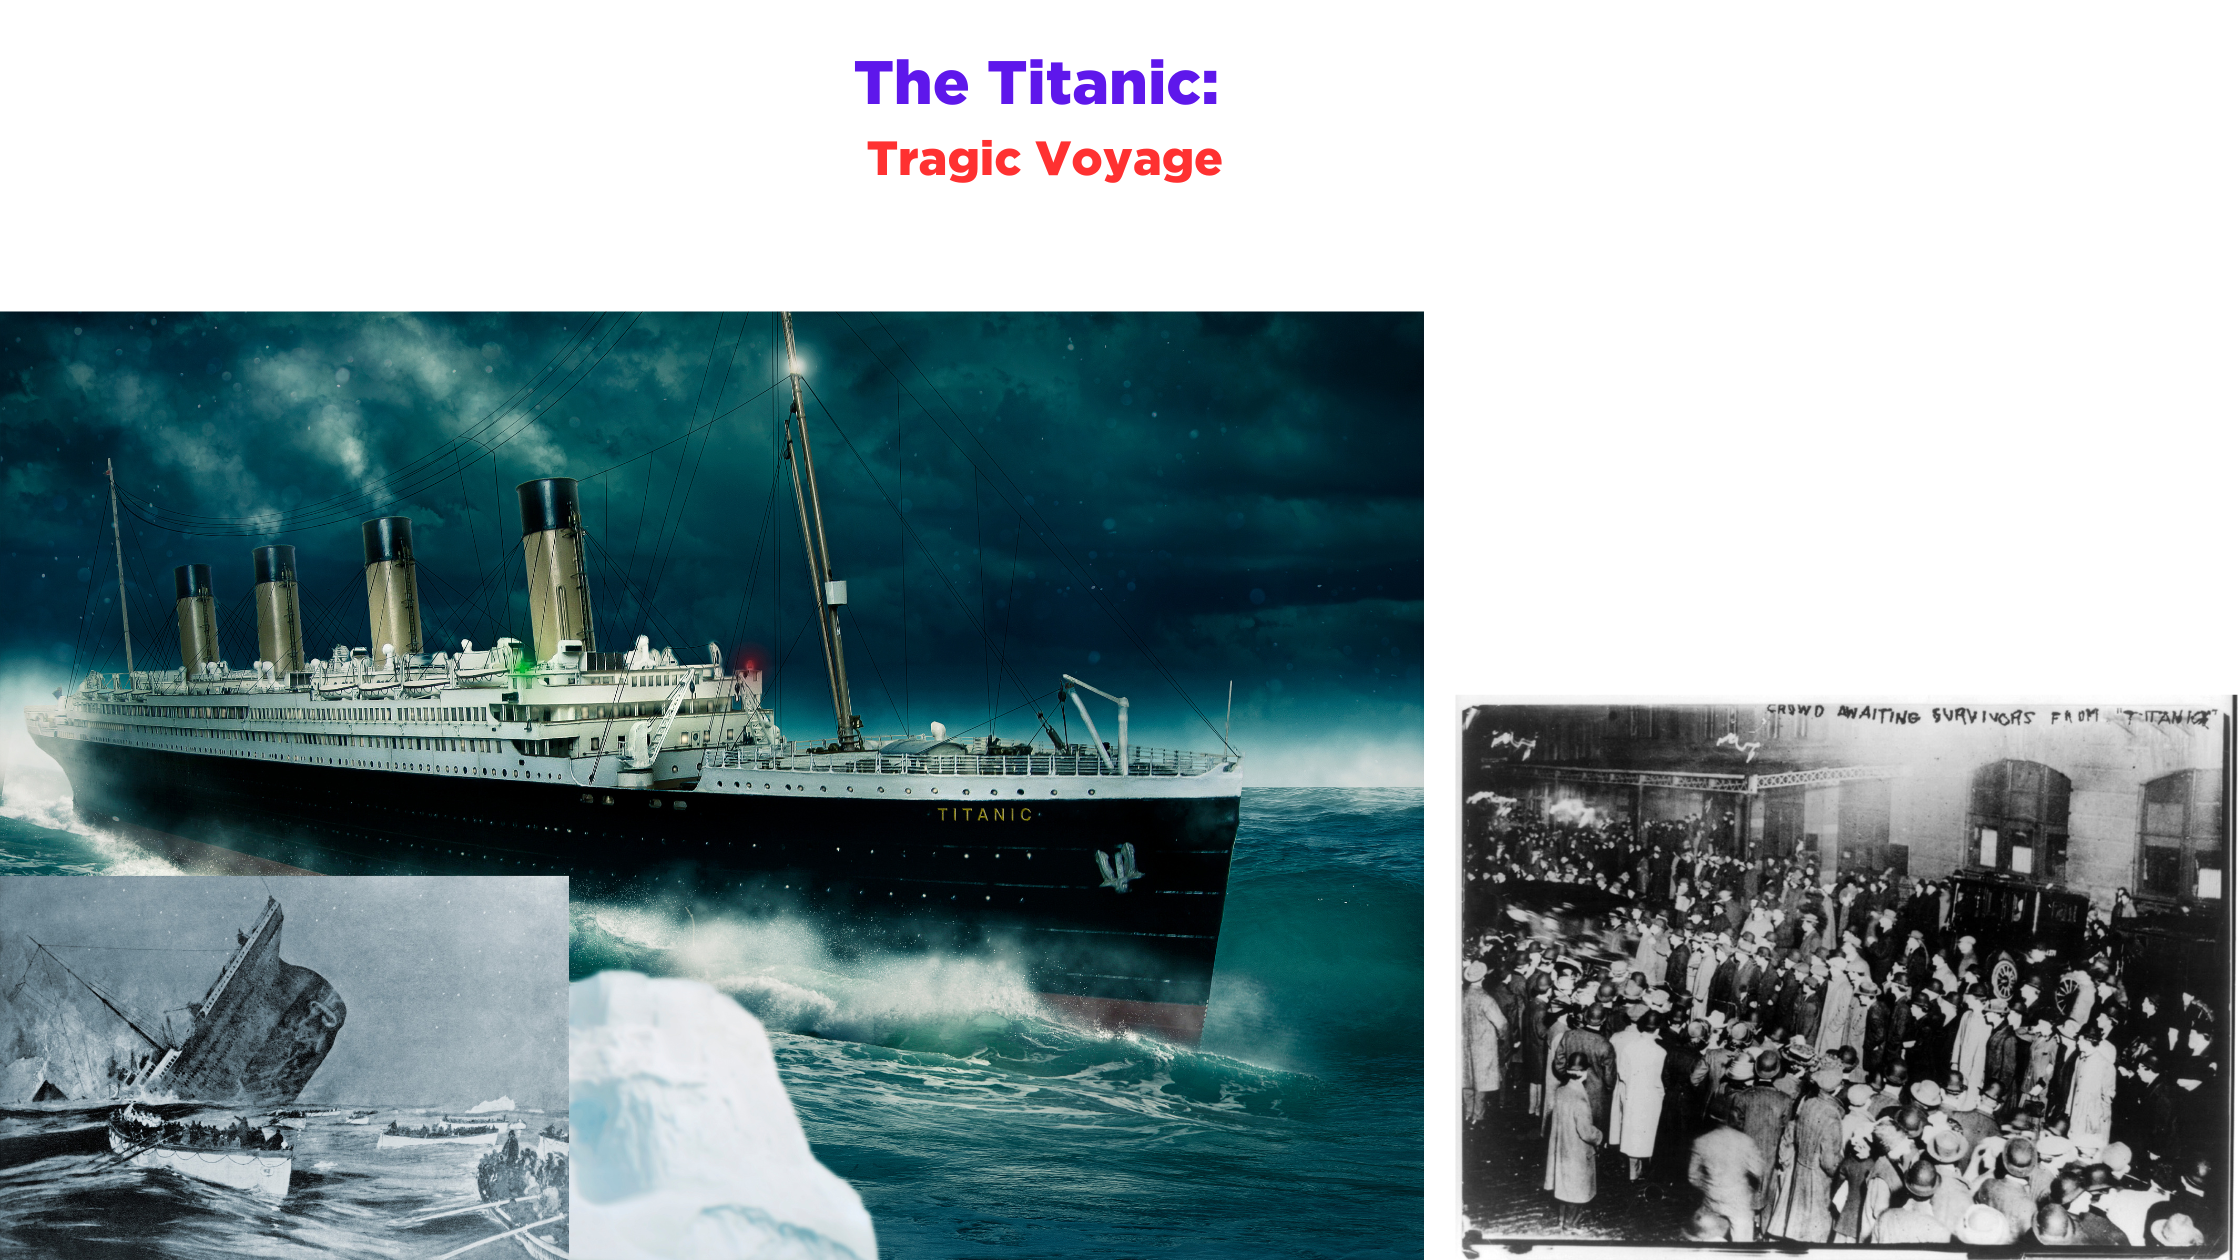 The Titanic: Tragic Voyage